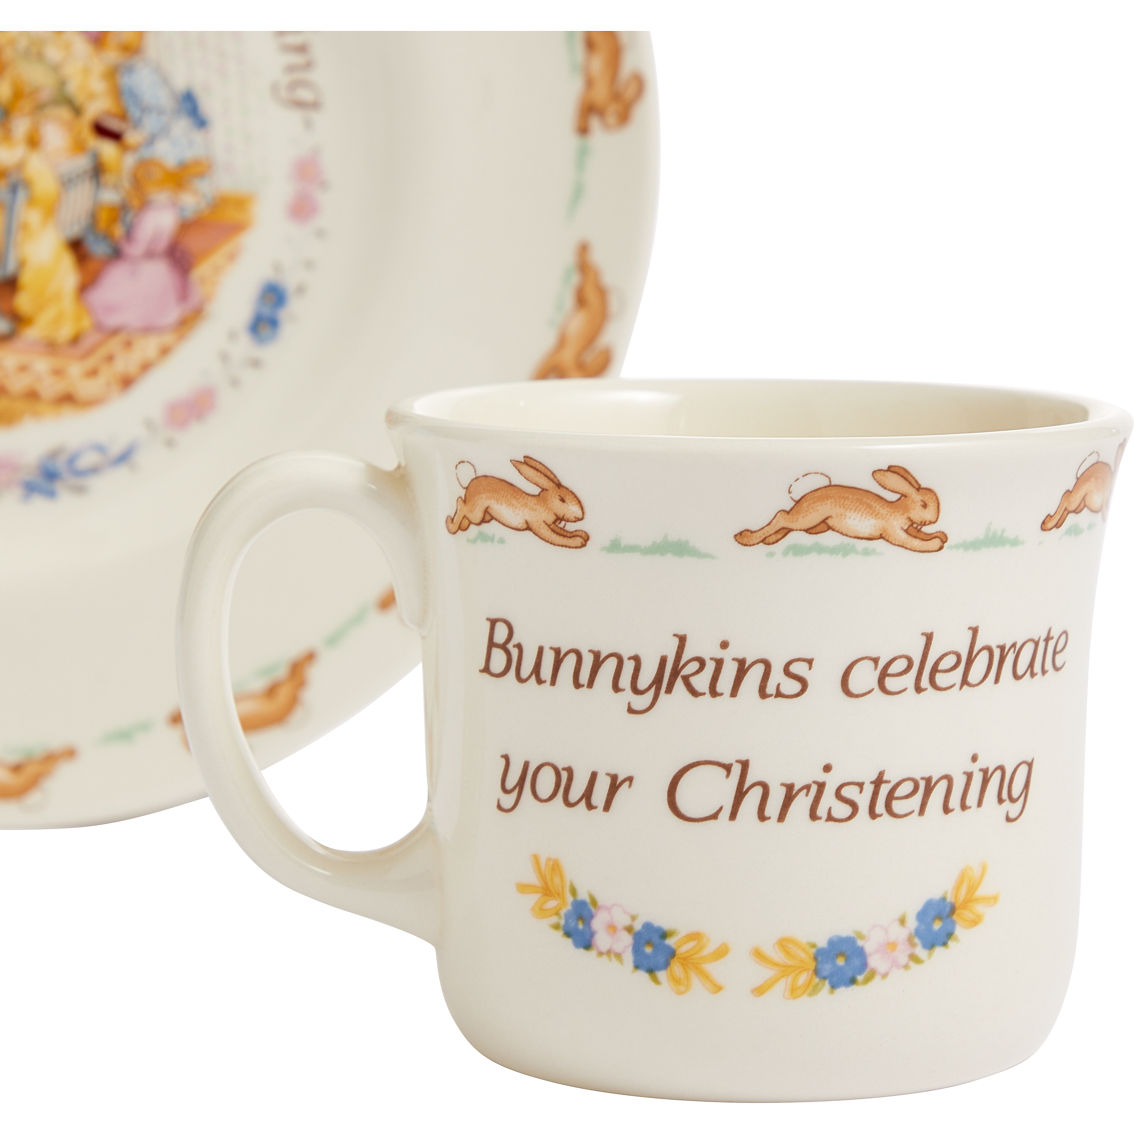 Royal Doulton Bunnykins Christening Plate & Mug 2 pc. Set - Image 2 of 2